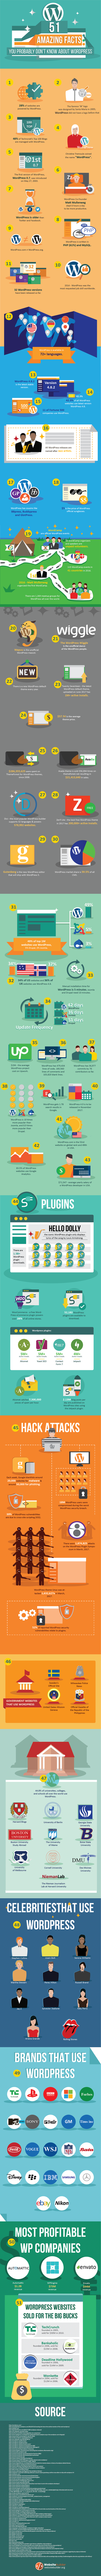 Wordpress-infographic